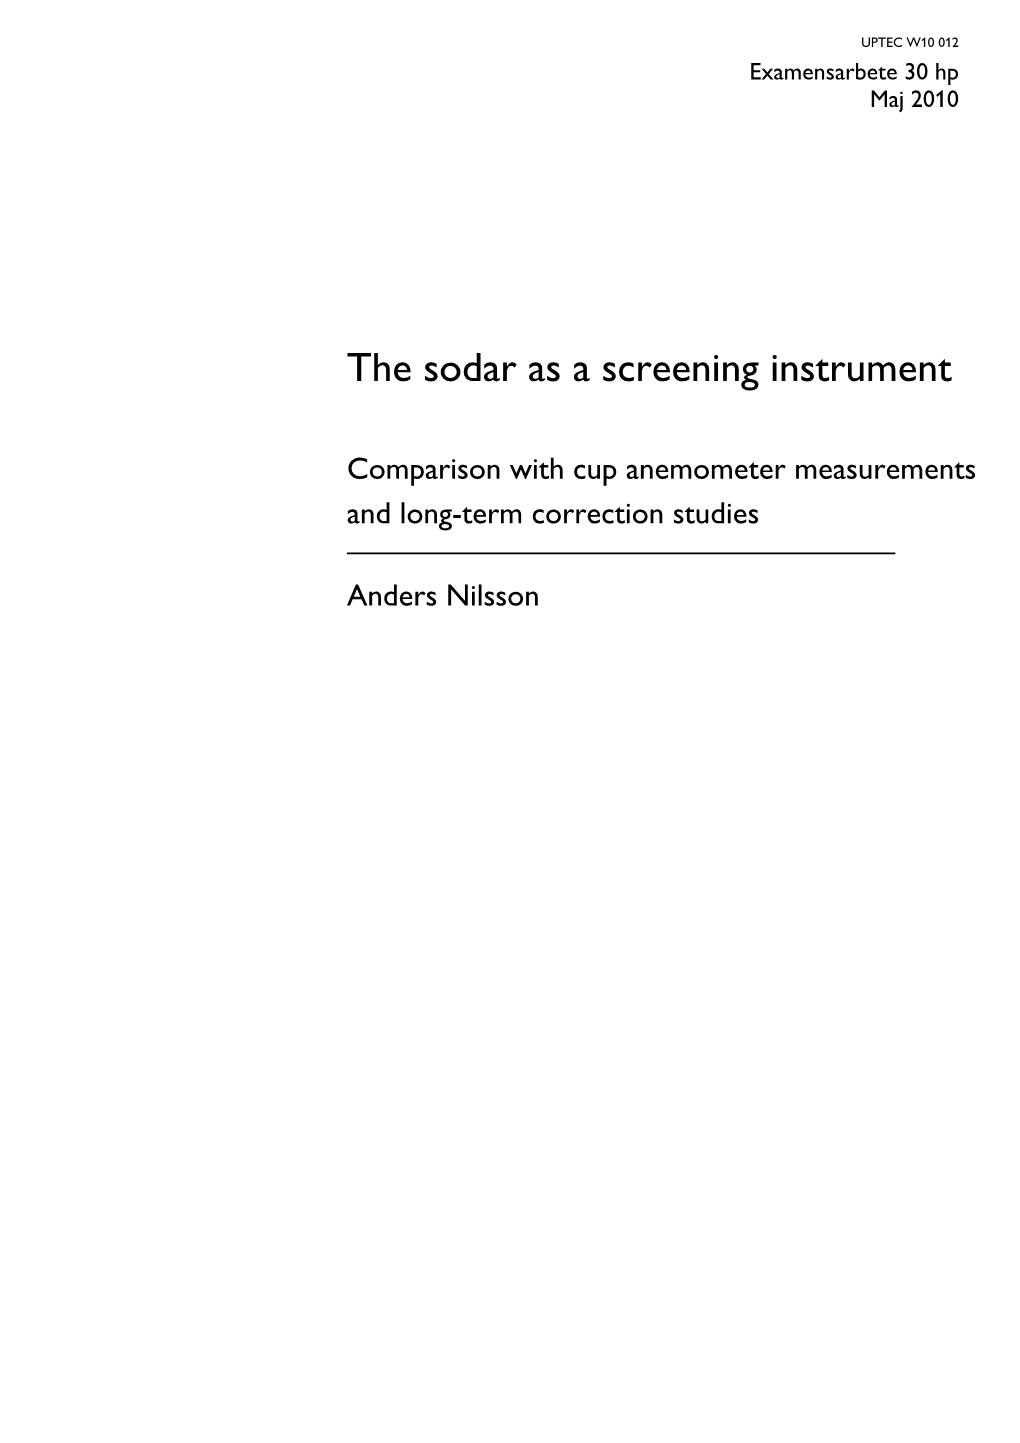 The Sodar As a Screening Instrument